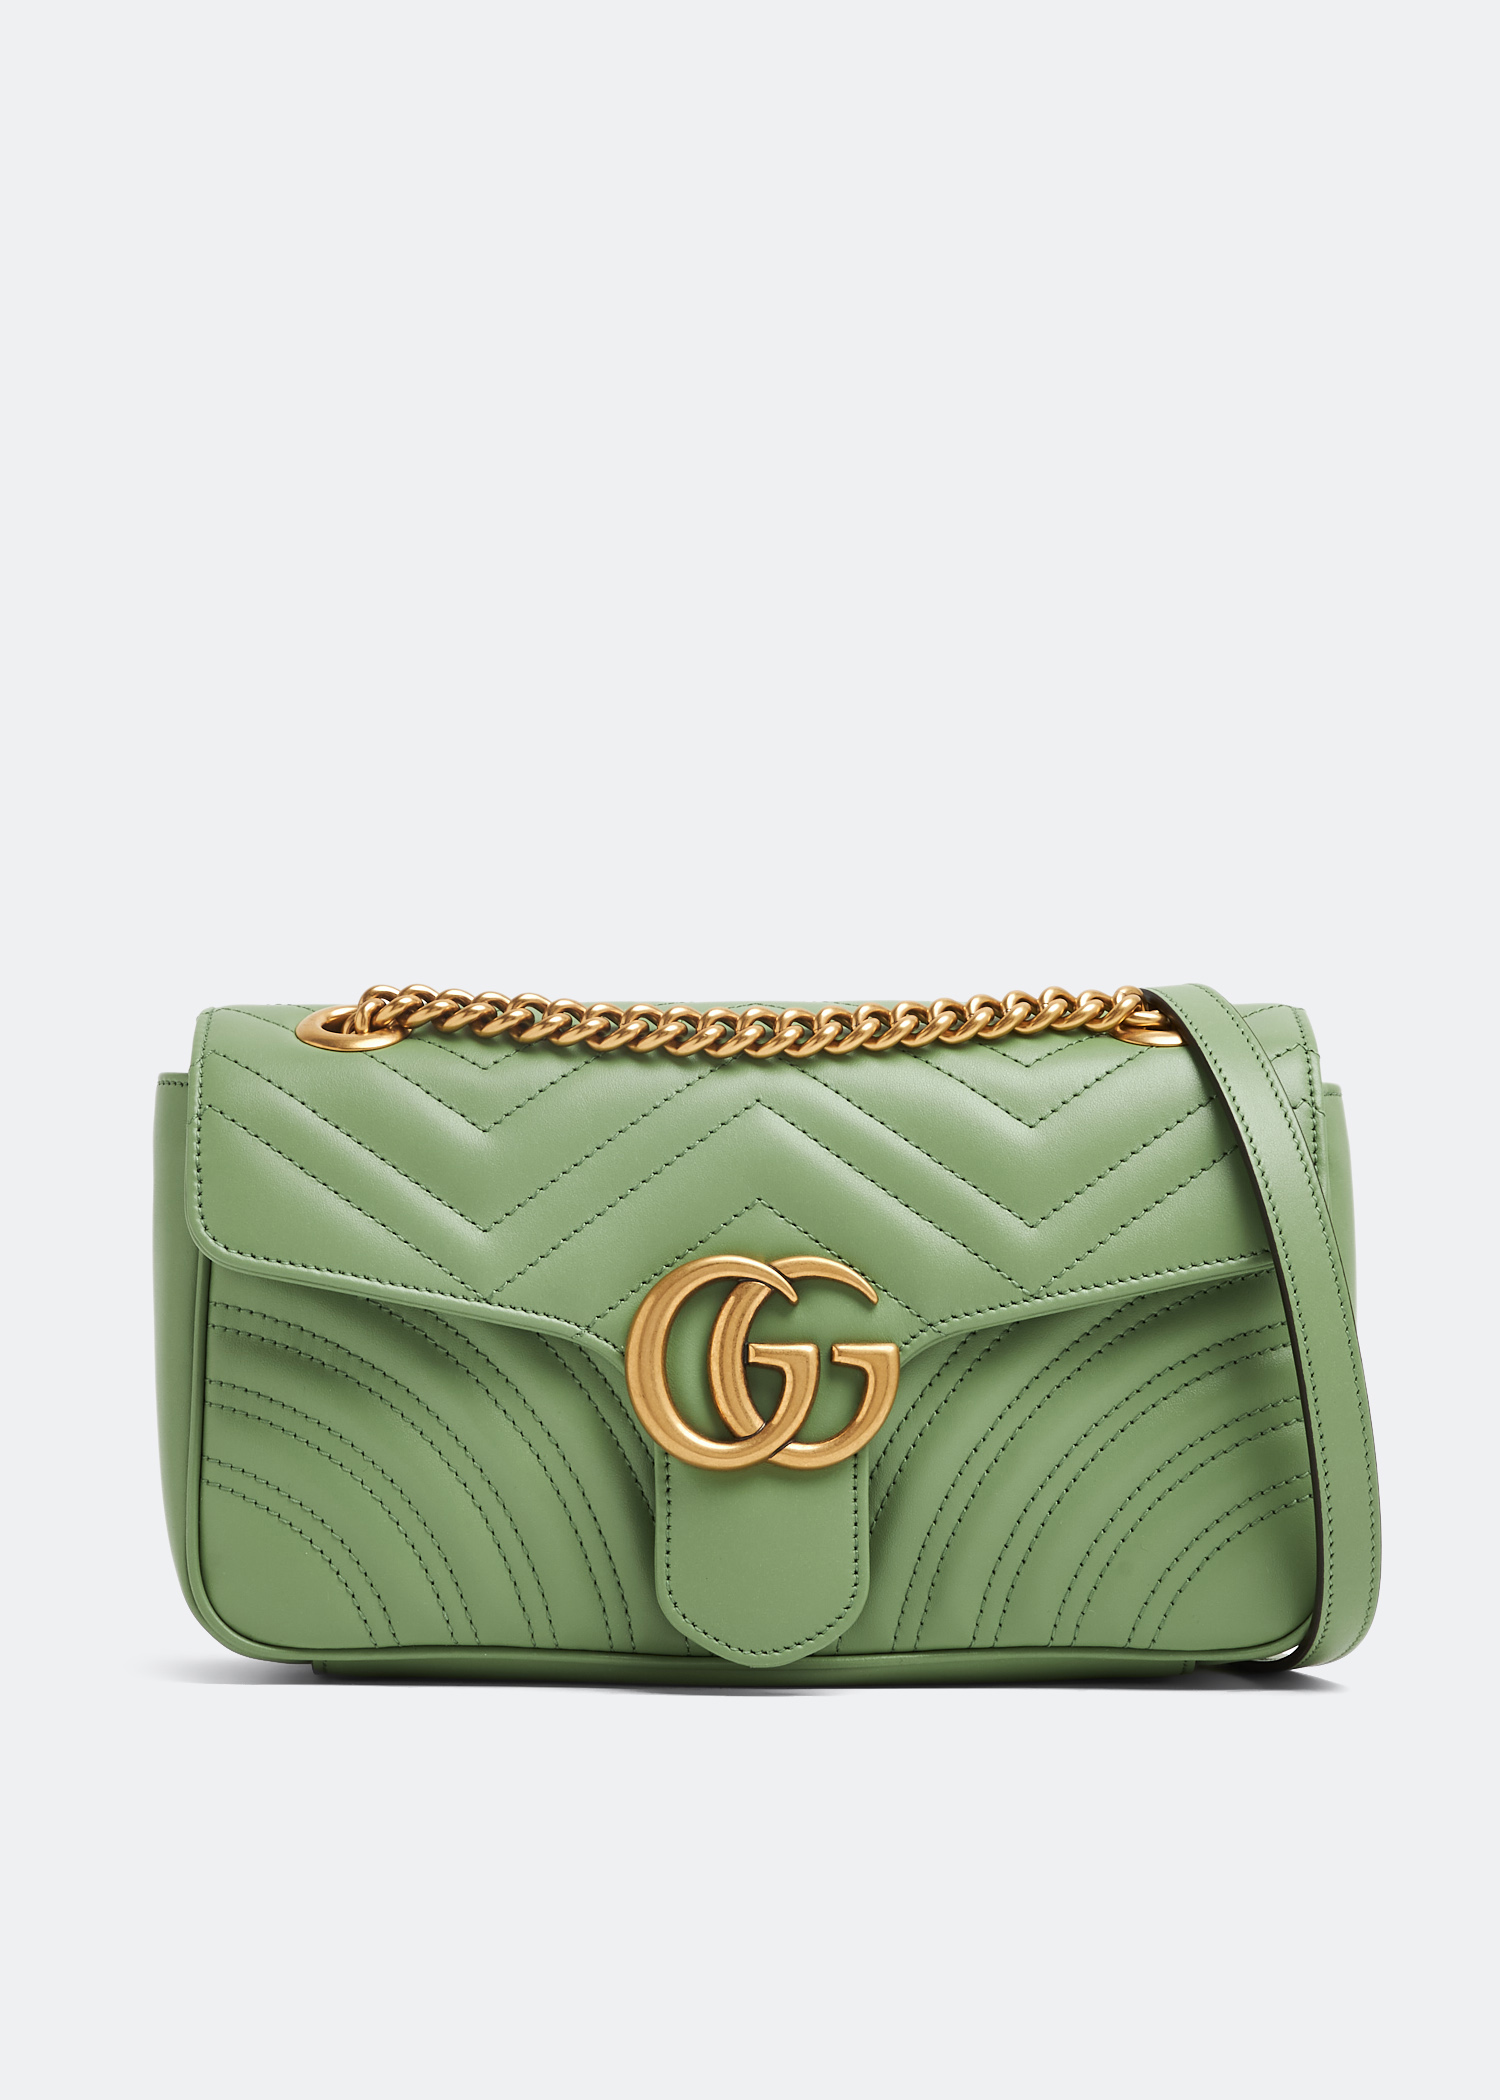 Gucci GG Marmont Matelassé shoulder bag for Women - Green in